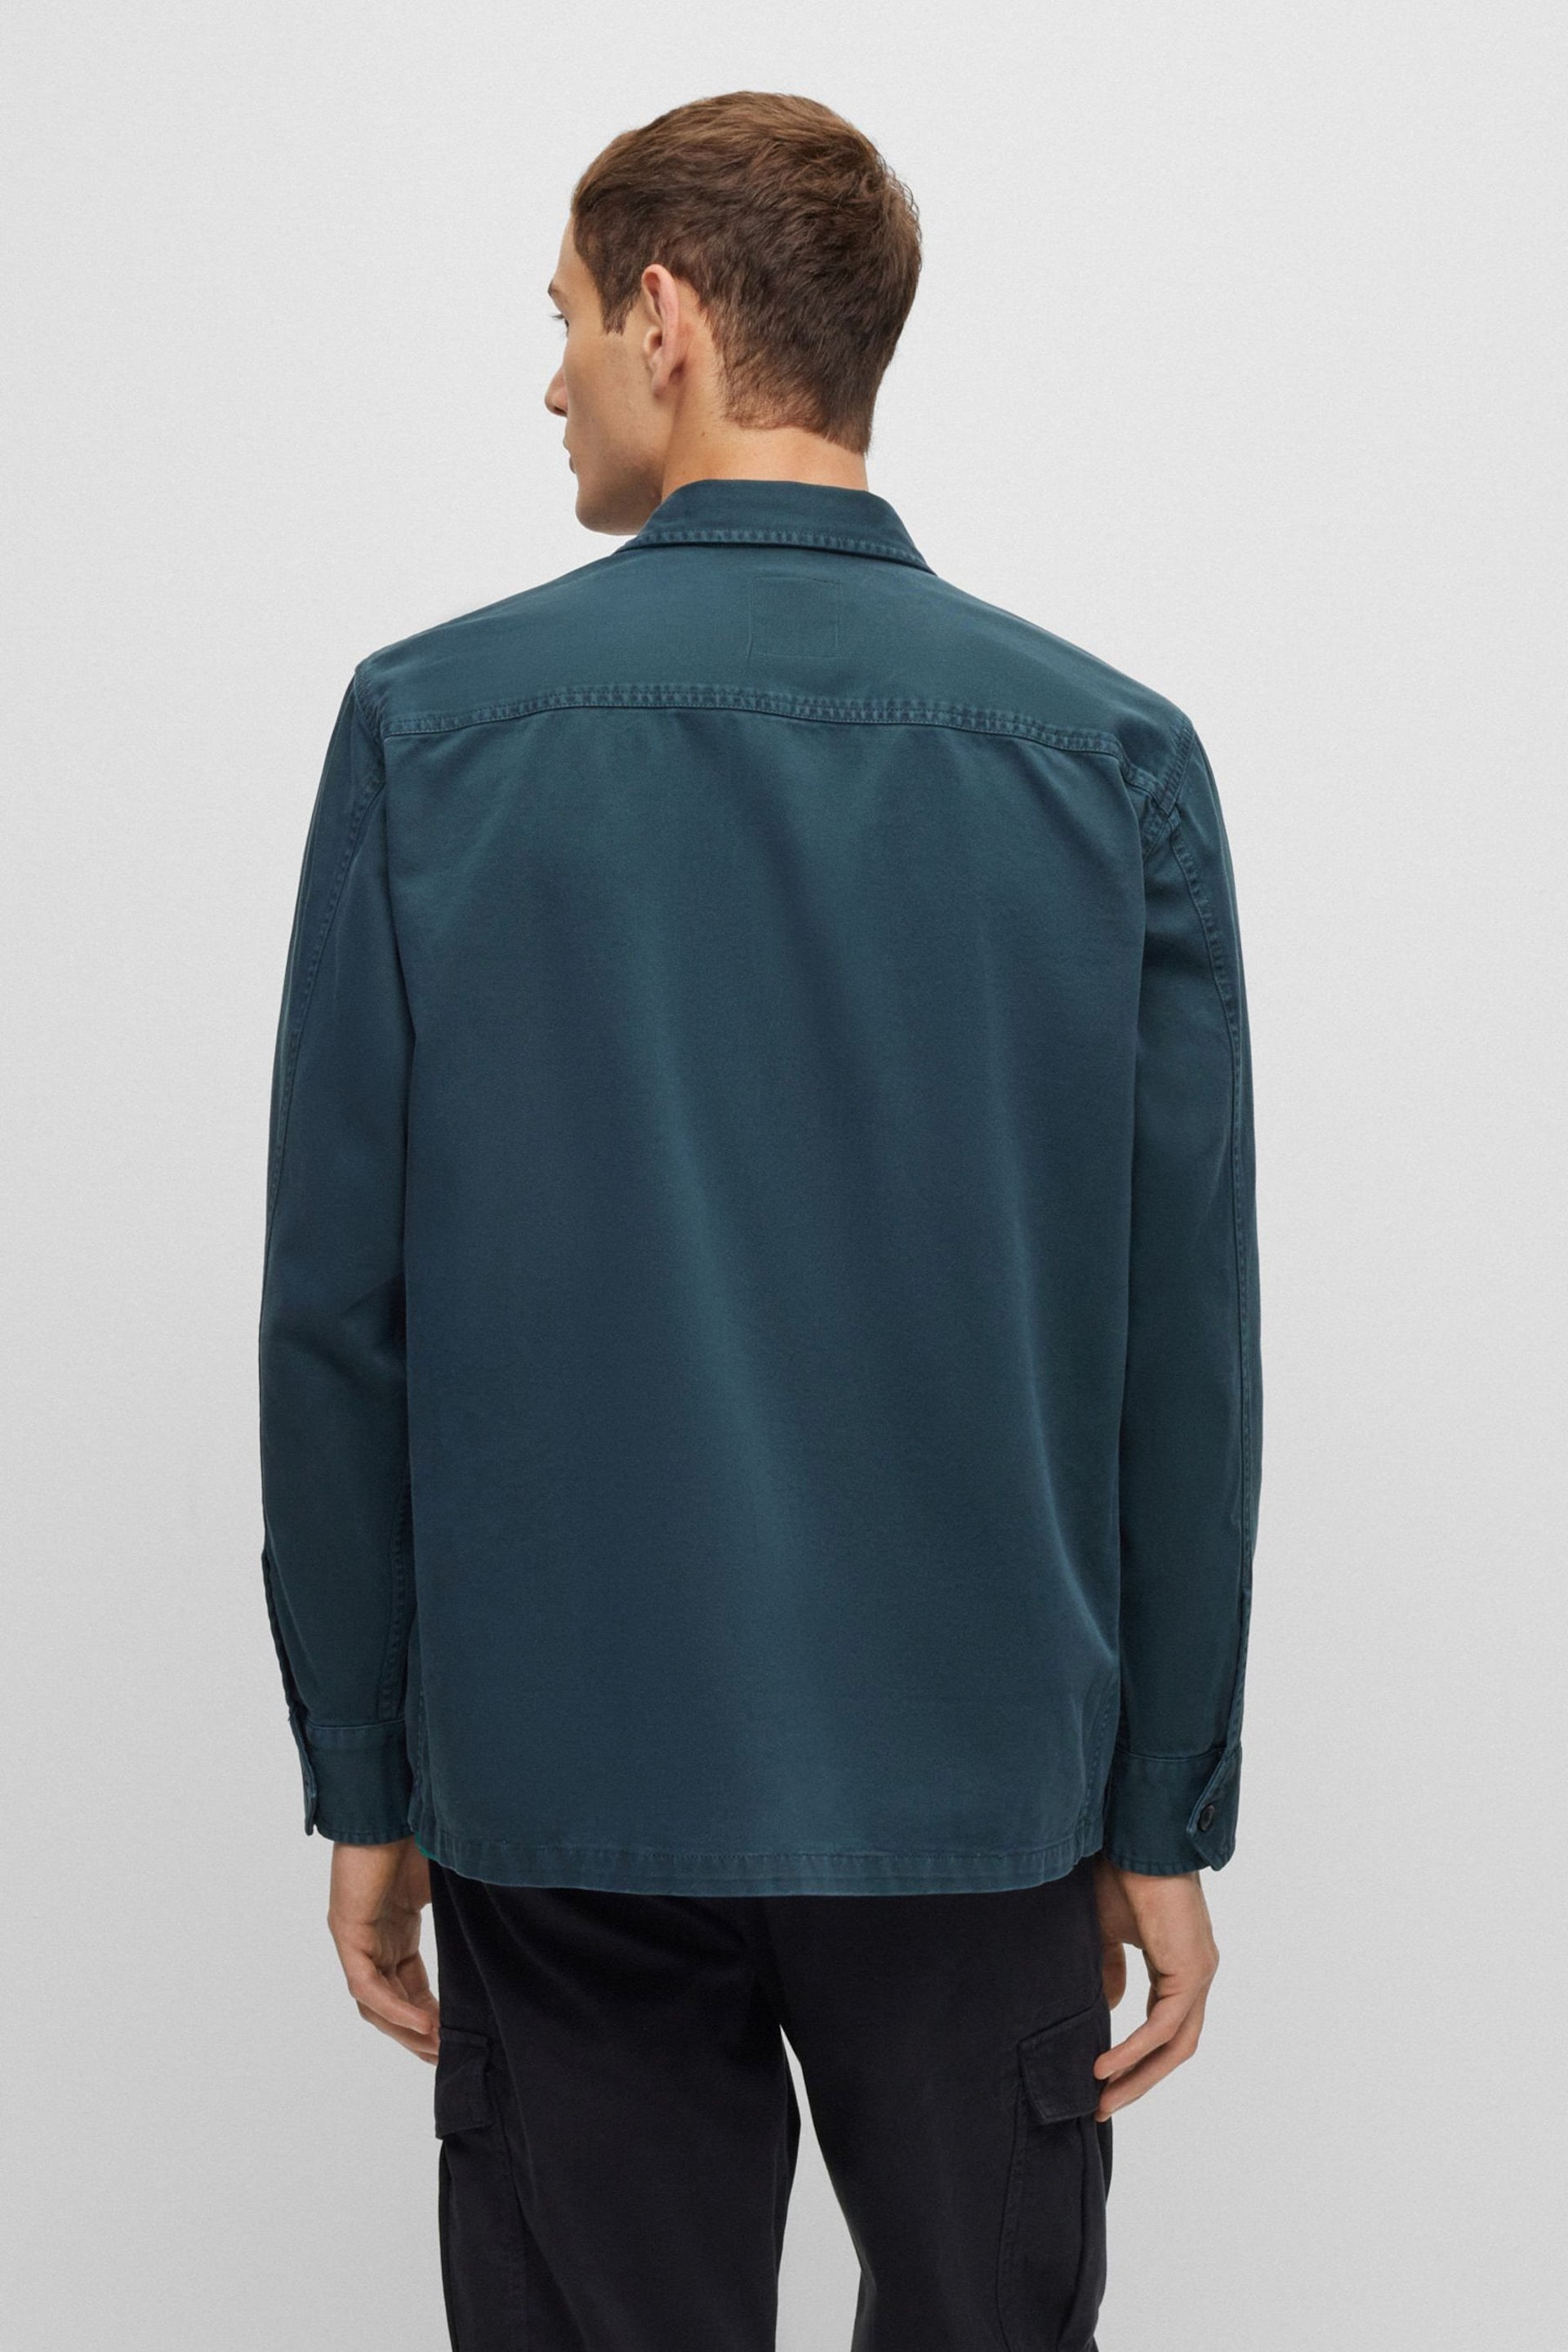 BOSS Green Garment Dyed Twill Overshirt - Image 2 of 6